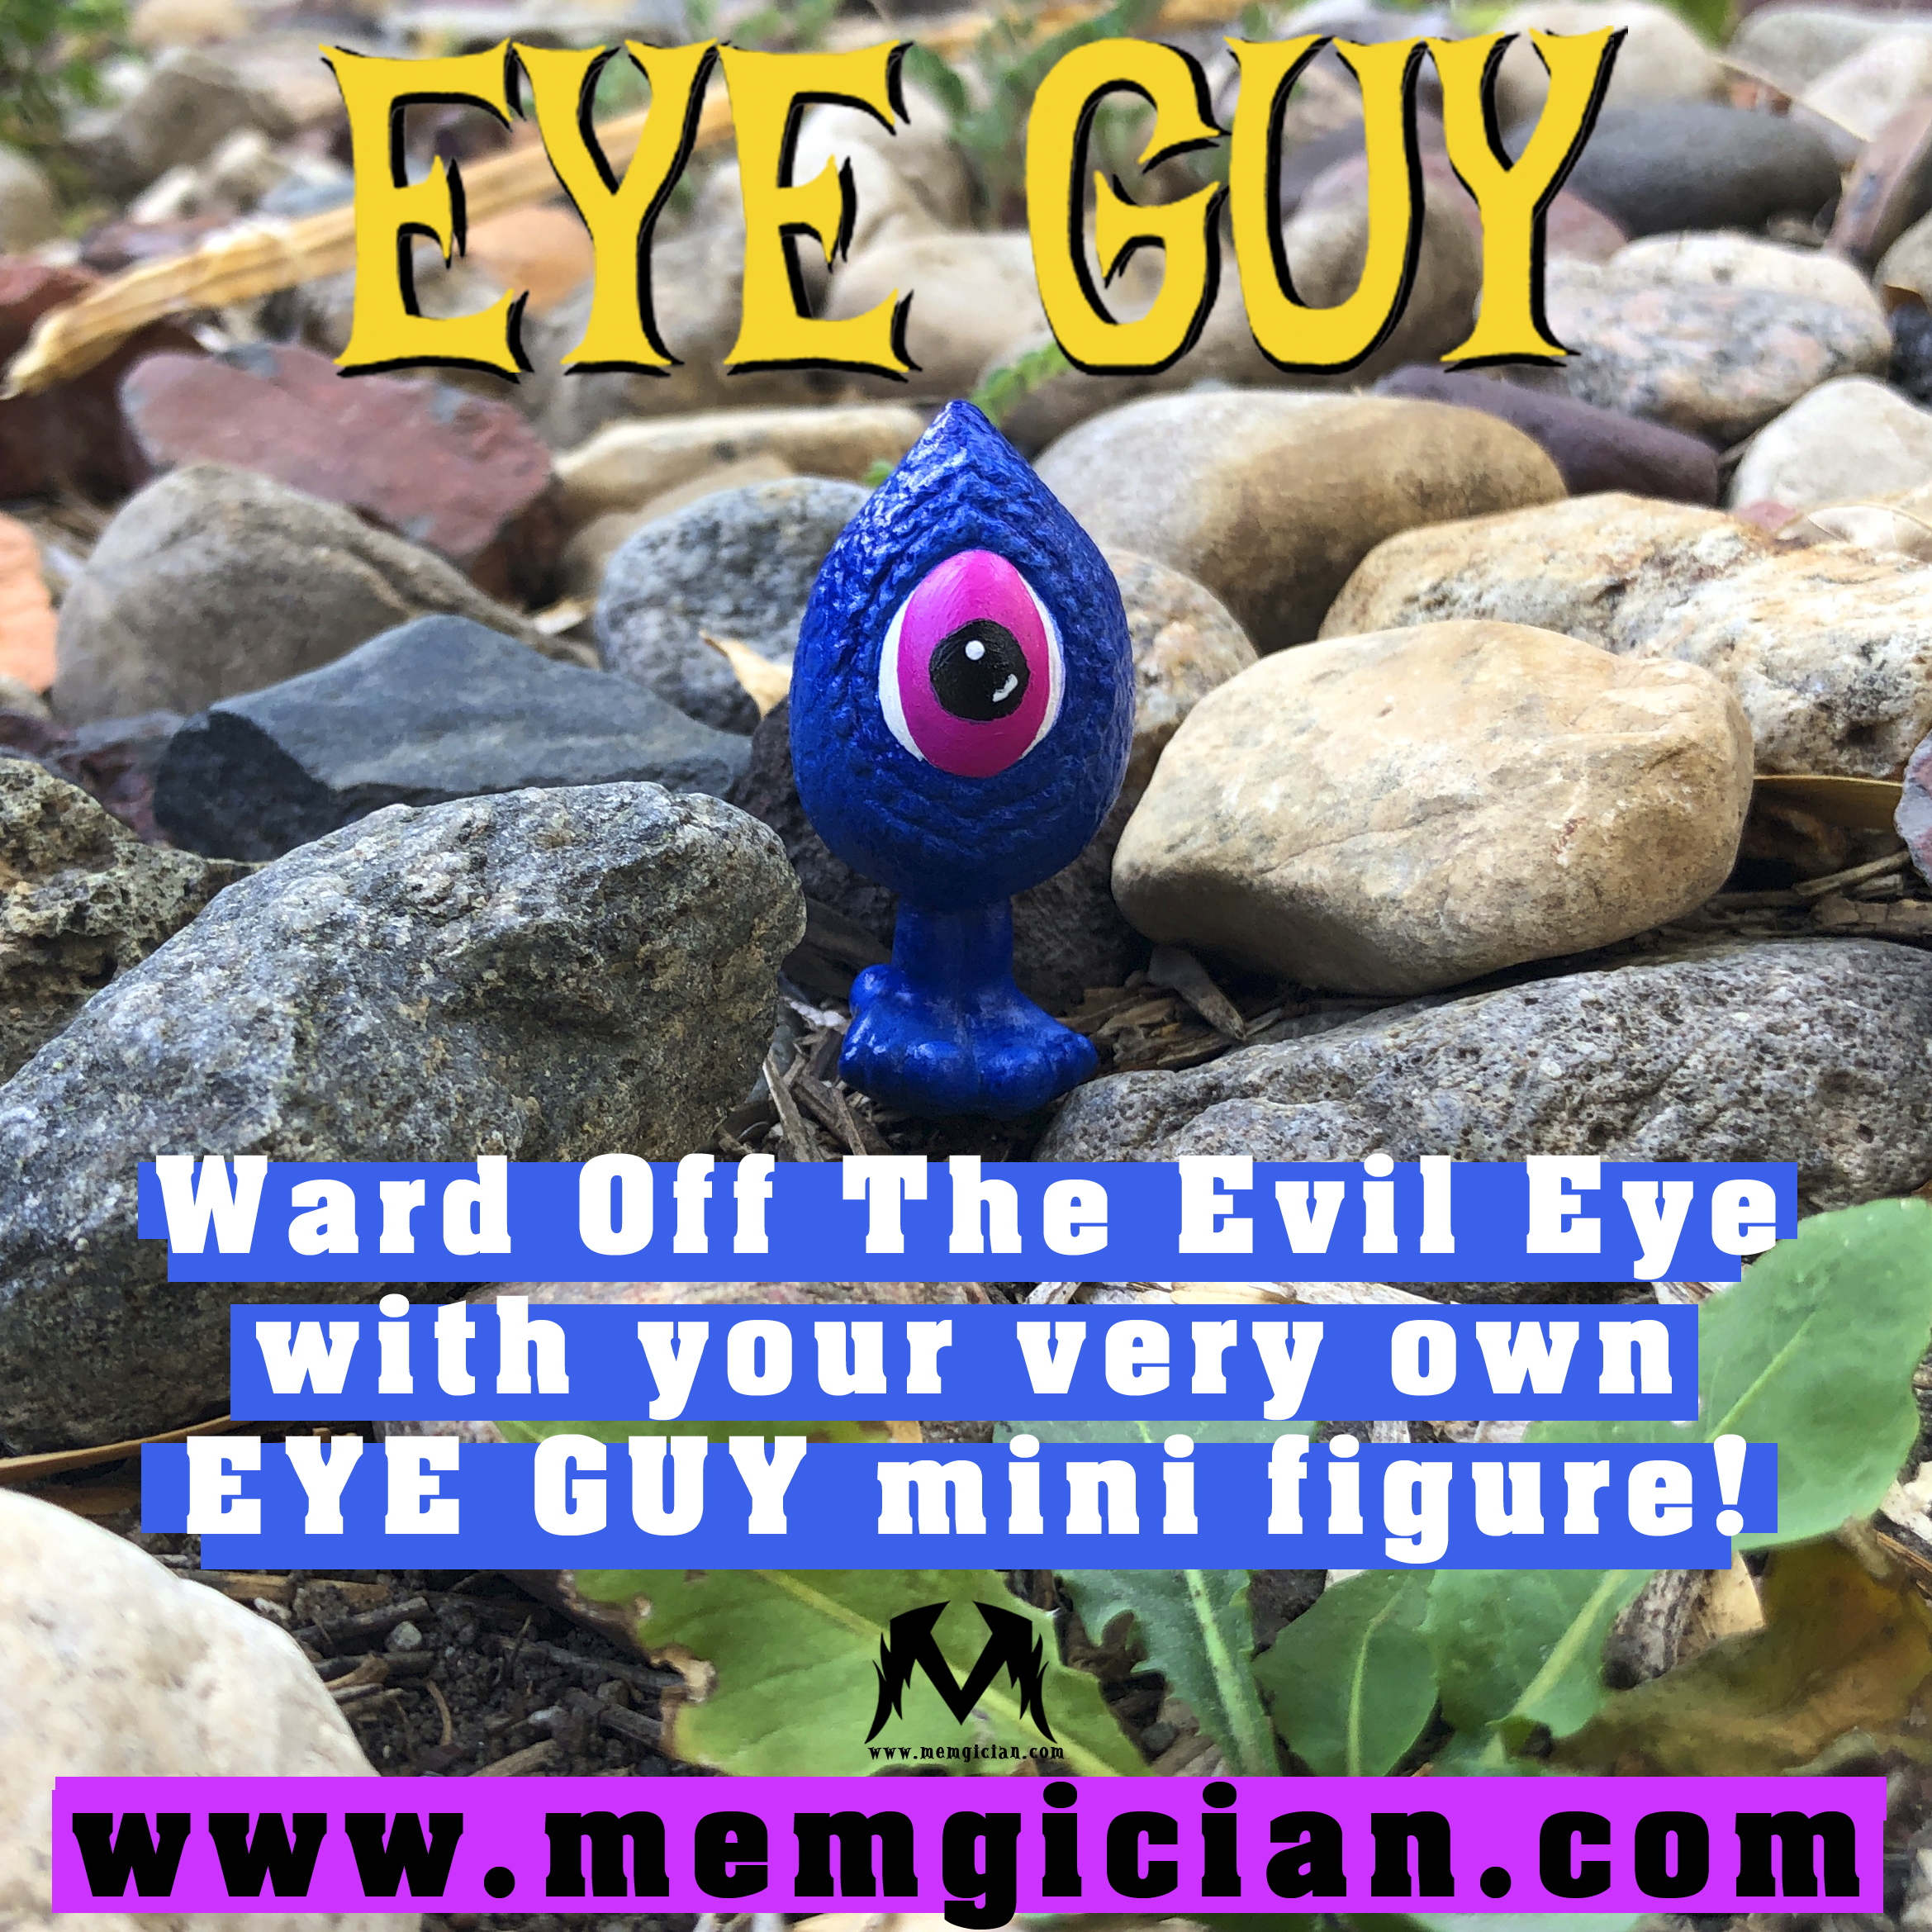 Eye Guy promo